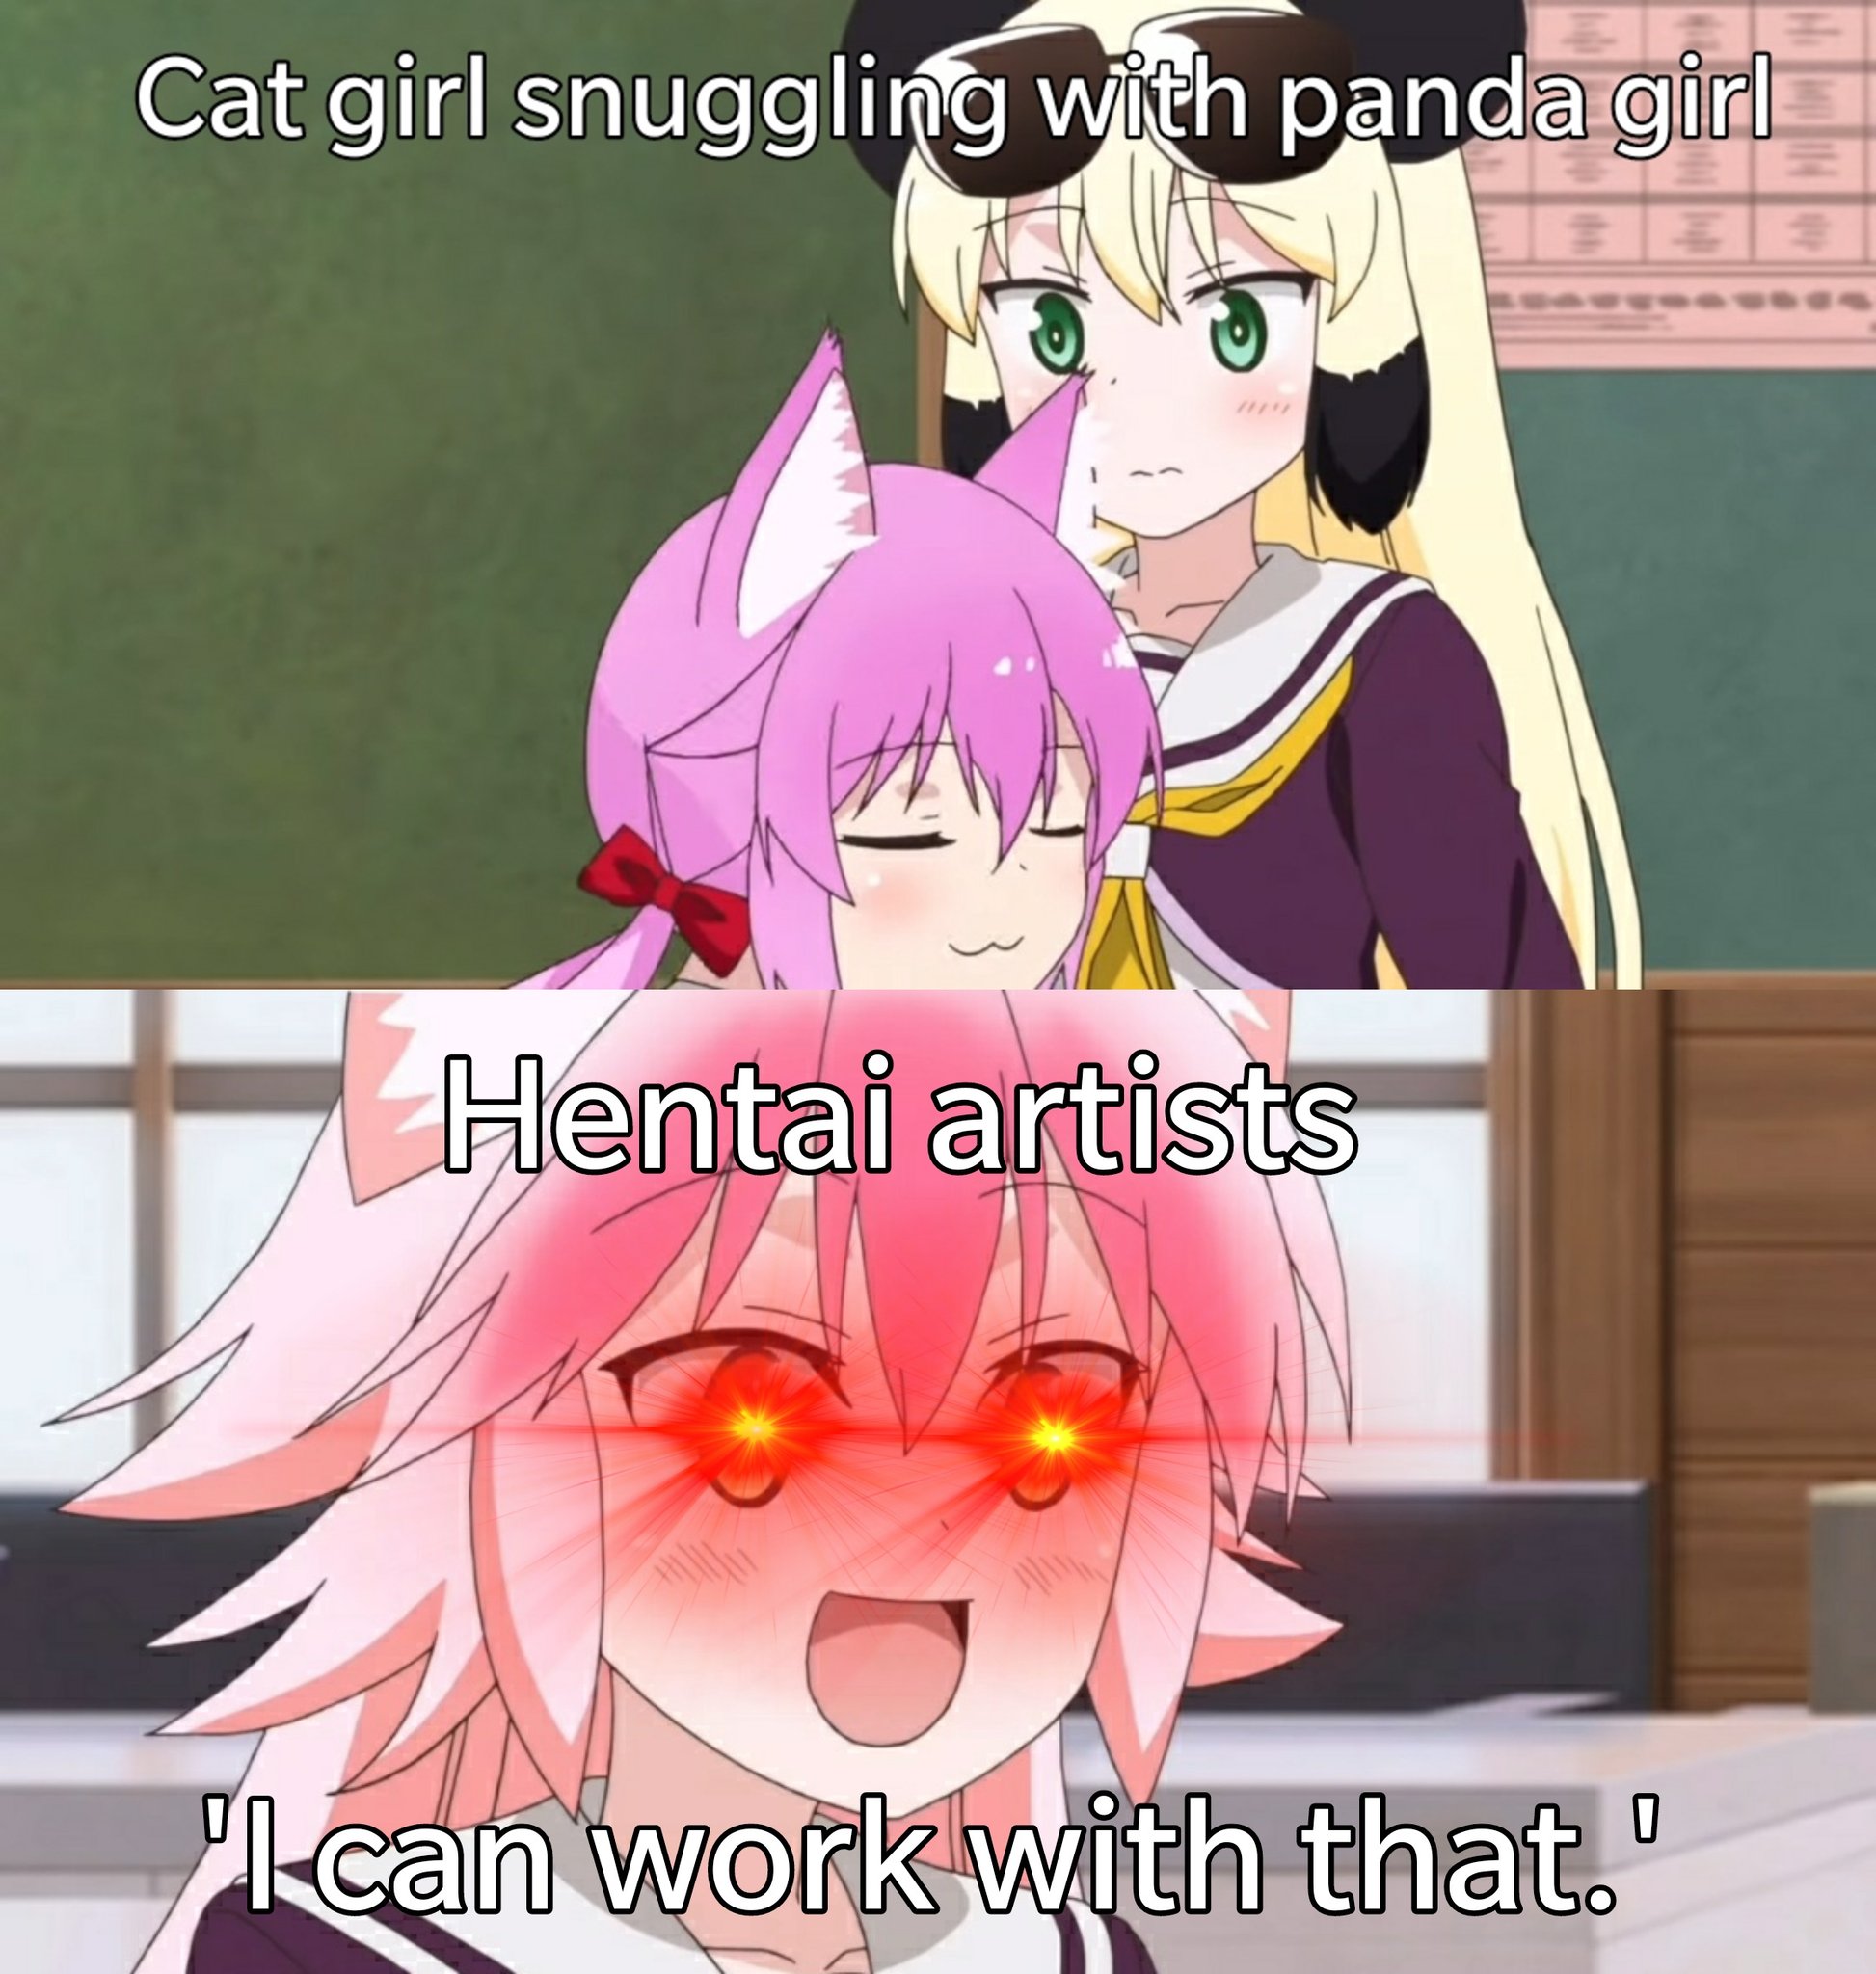 r/animemes on X: Realistic Cat Girls #Animemes #memes #anime    / X